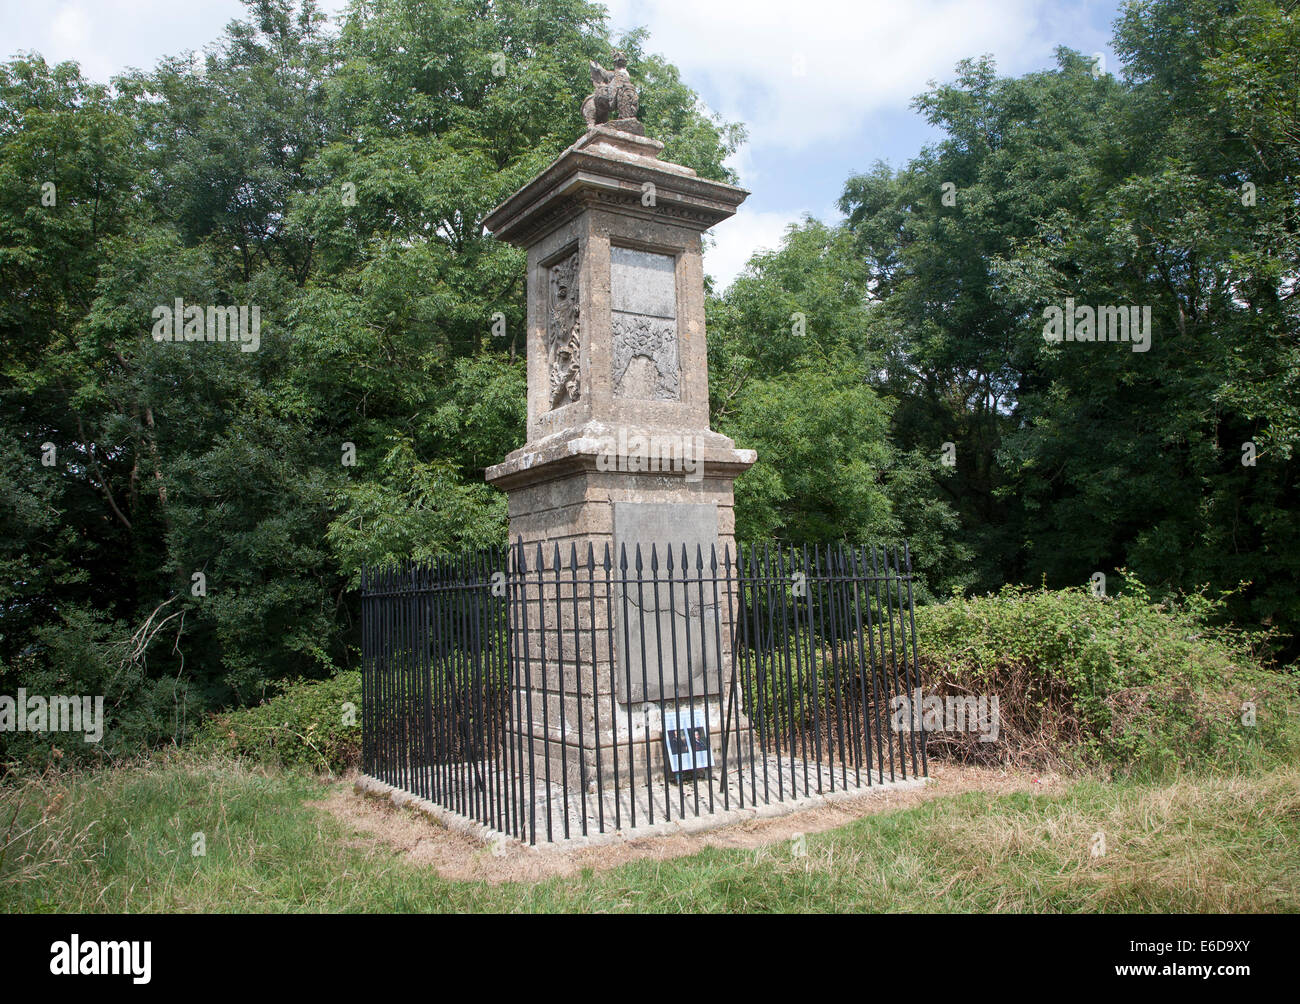 Sir Bevil Grenville monument marking battle of Lansdown 1643 in English Civil war, near Bath, Somerset, England. erected 1720 Stock Photo